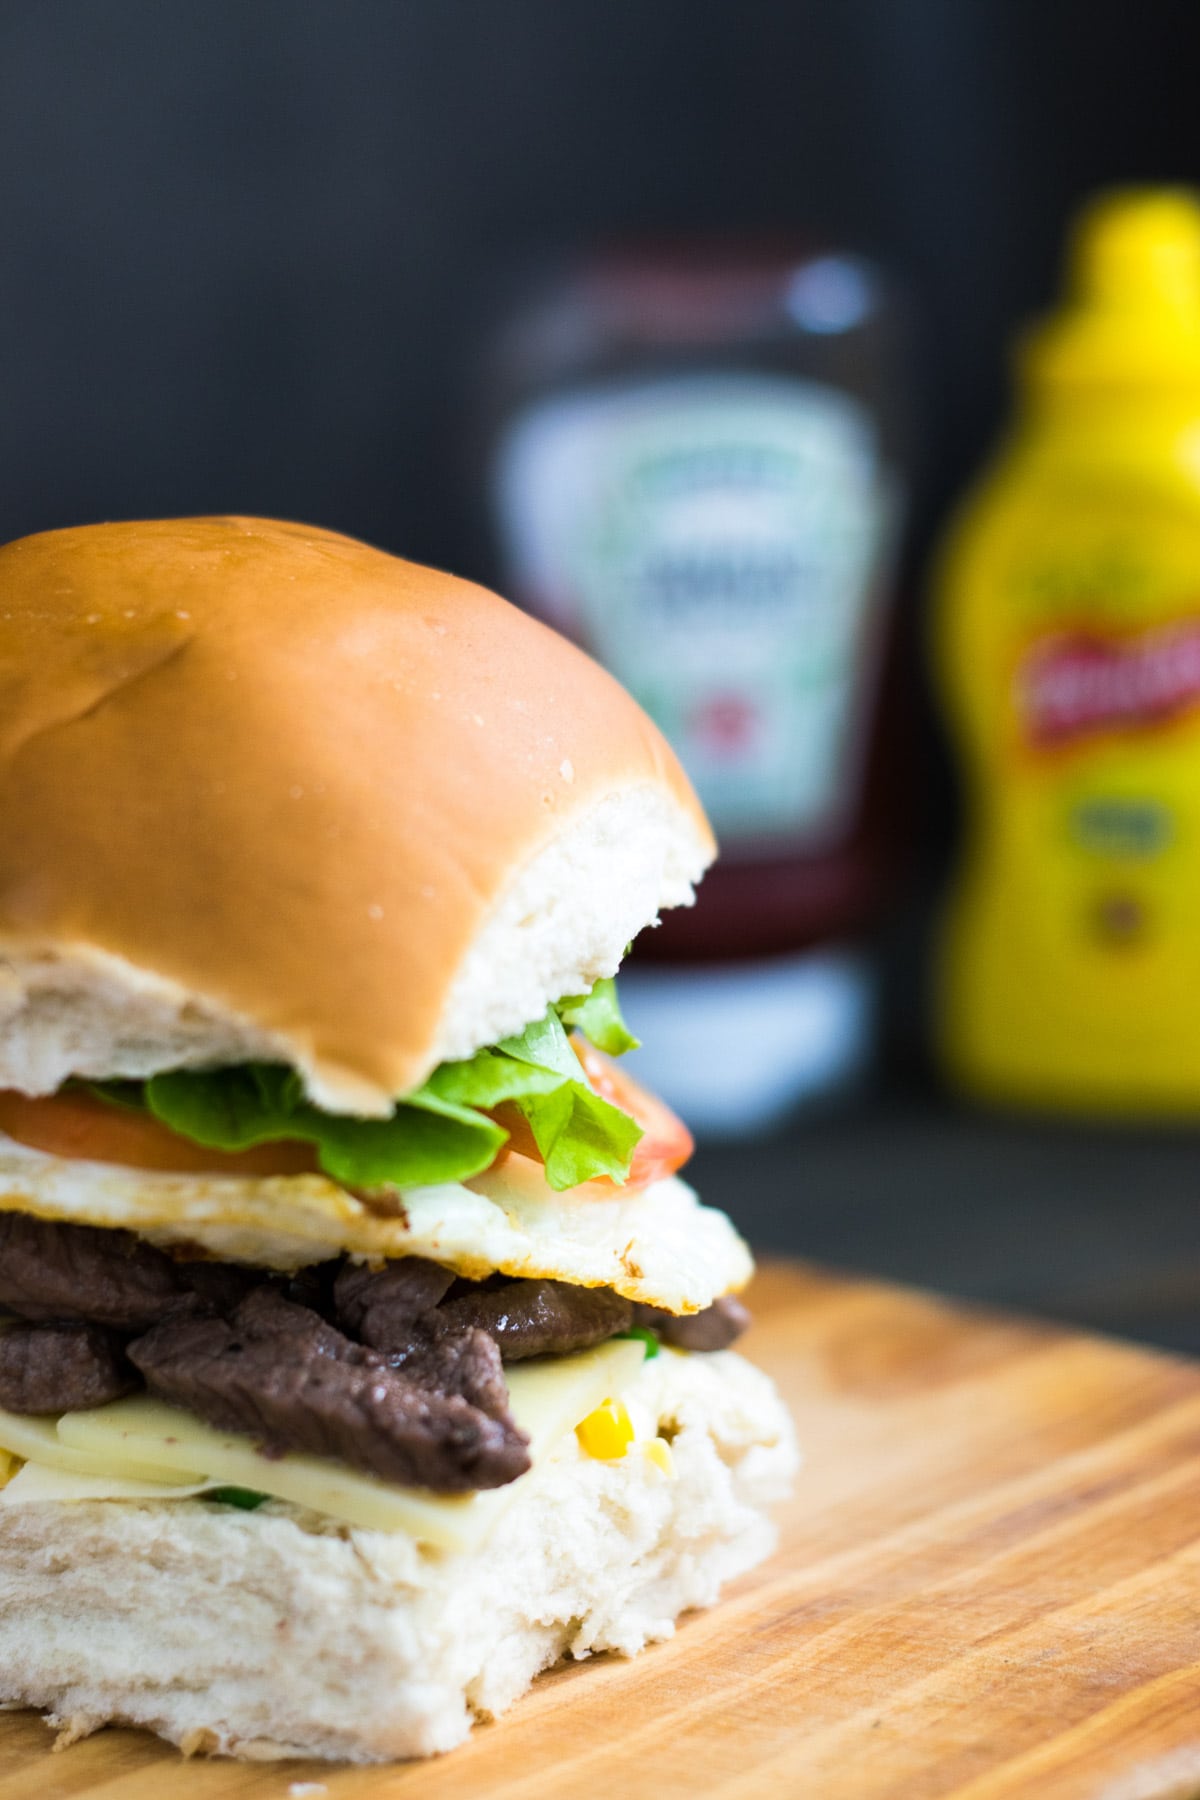 The Authentic Brazilian Pressed Xis-Burger! (@braziburger_orlando